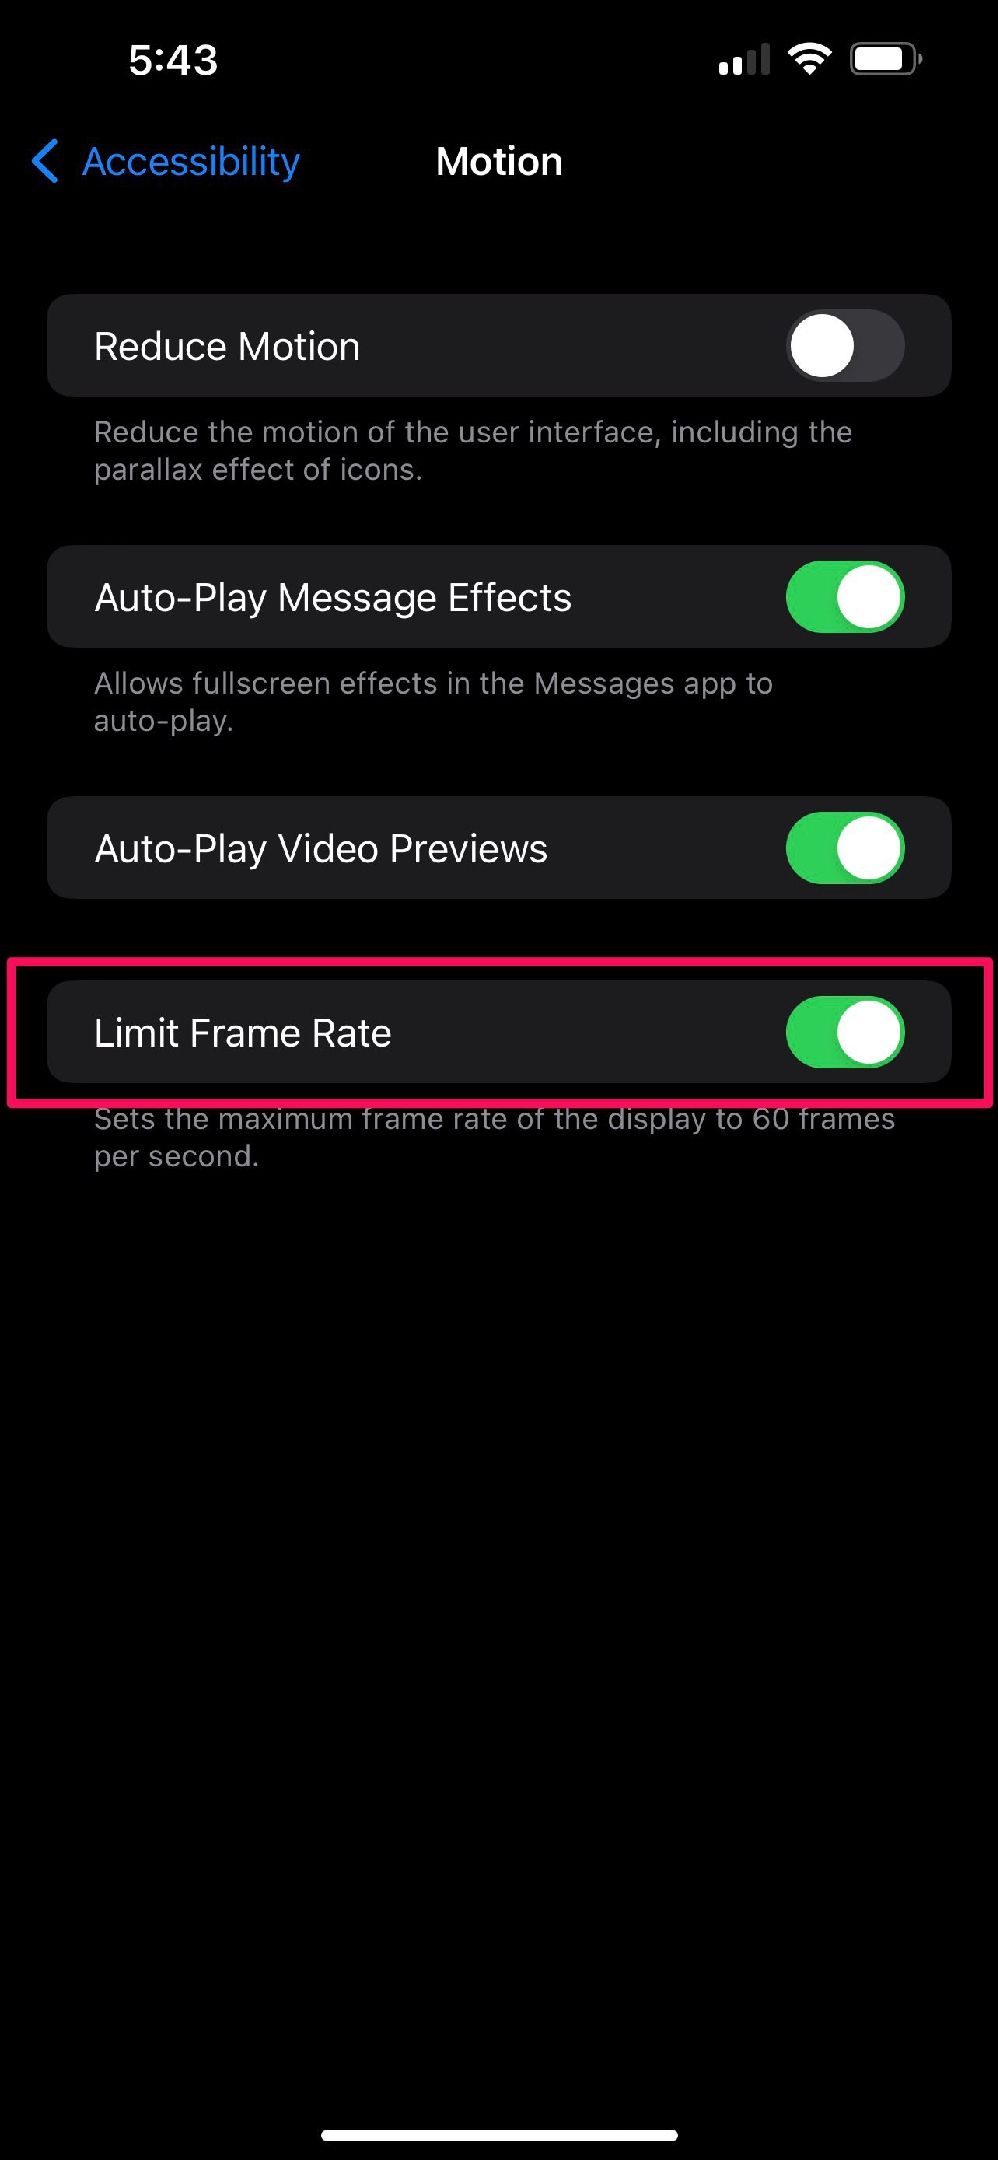 iOS Motion settings